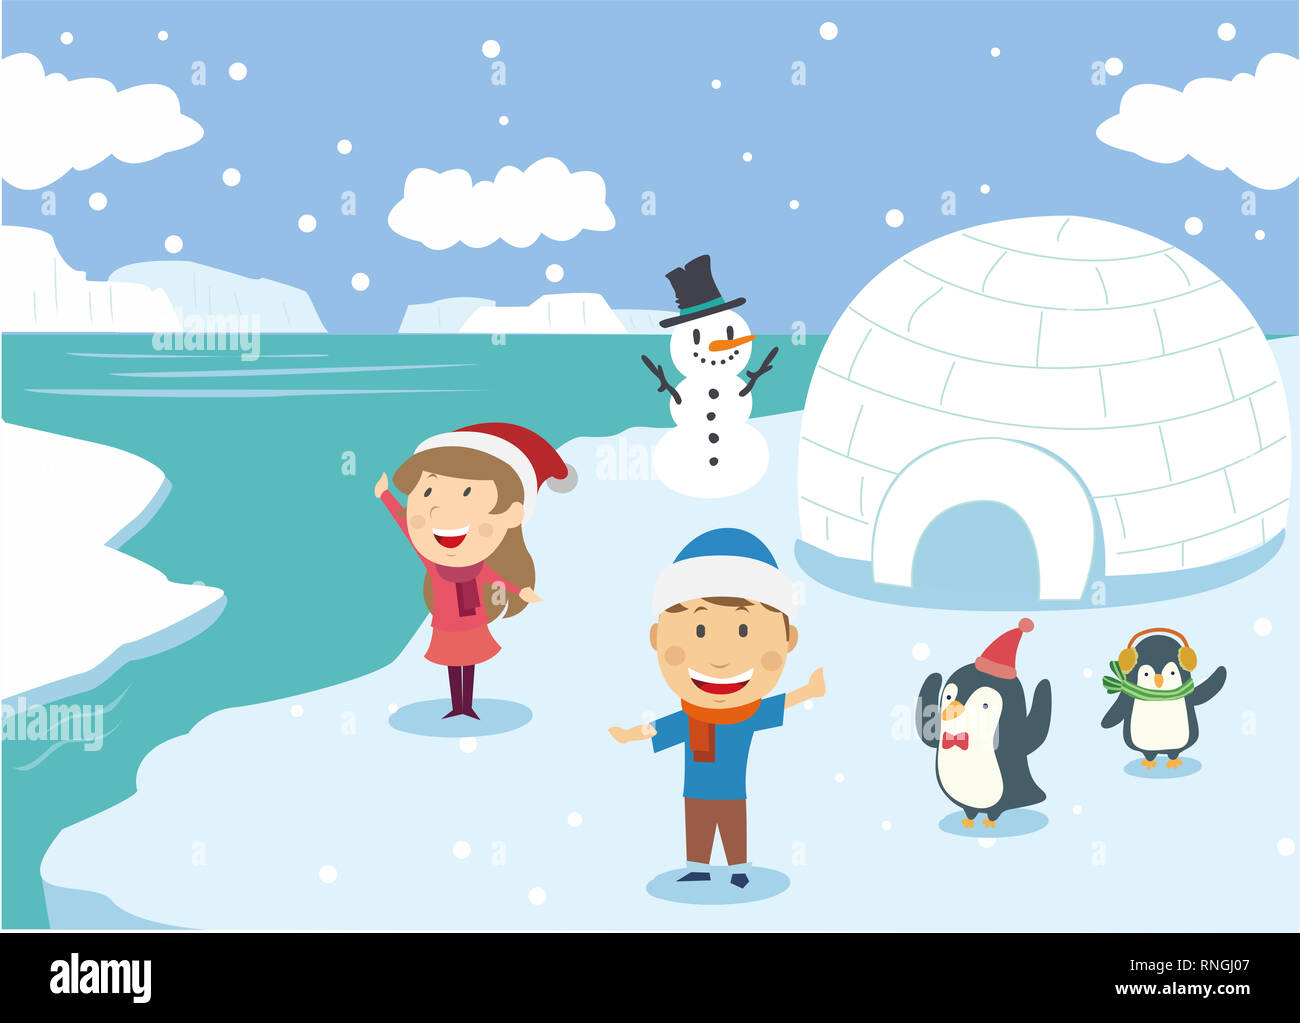 Ice and snow world illustrations Stock Photo - Alamy